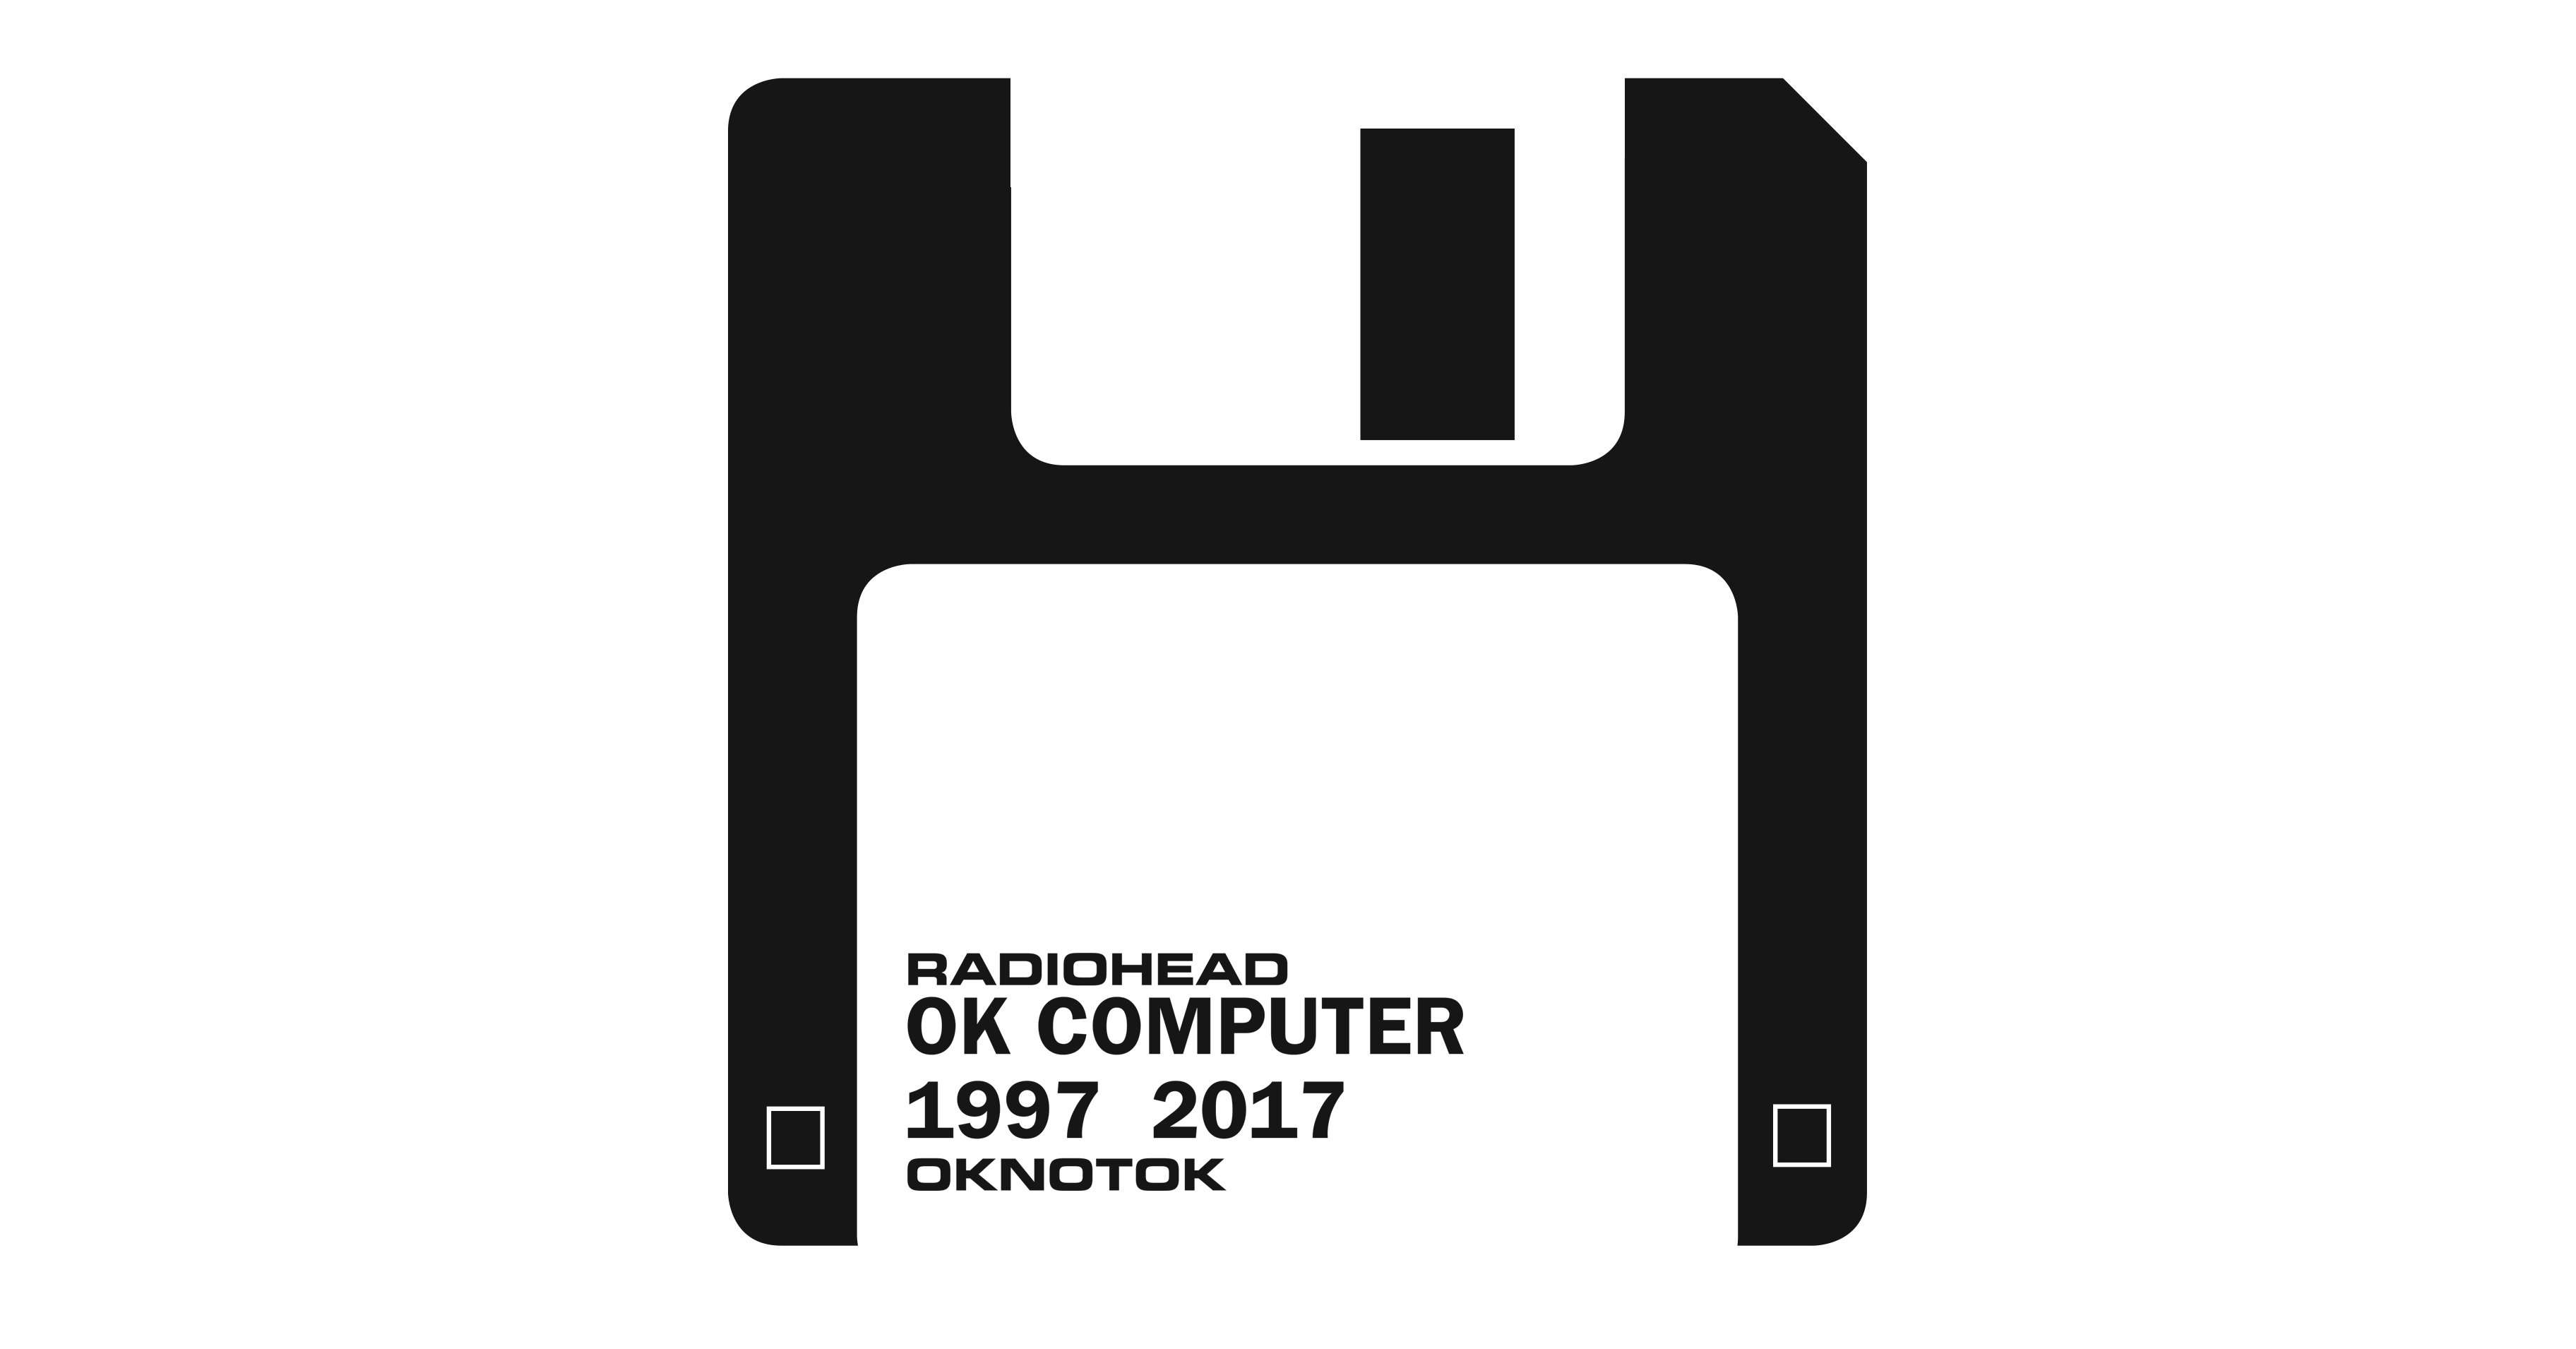 image for OK Computer OKNOTOK 1997 2017